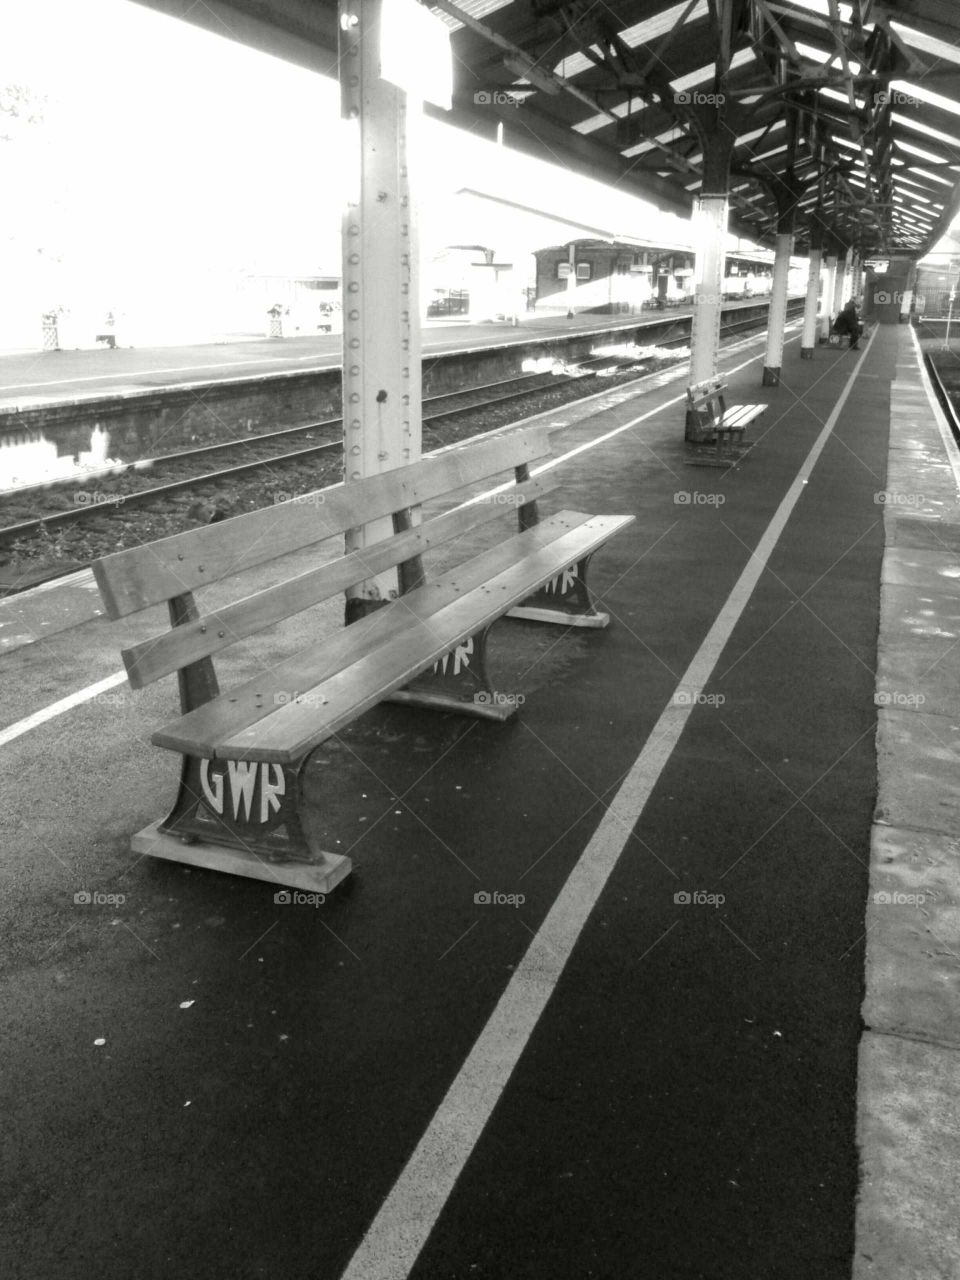 Truro Cornwall Train station monochrome bench on platform 2 old gwr line